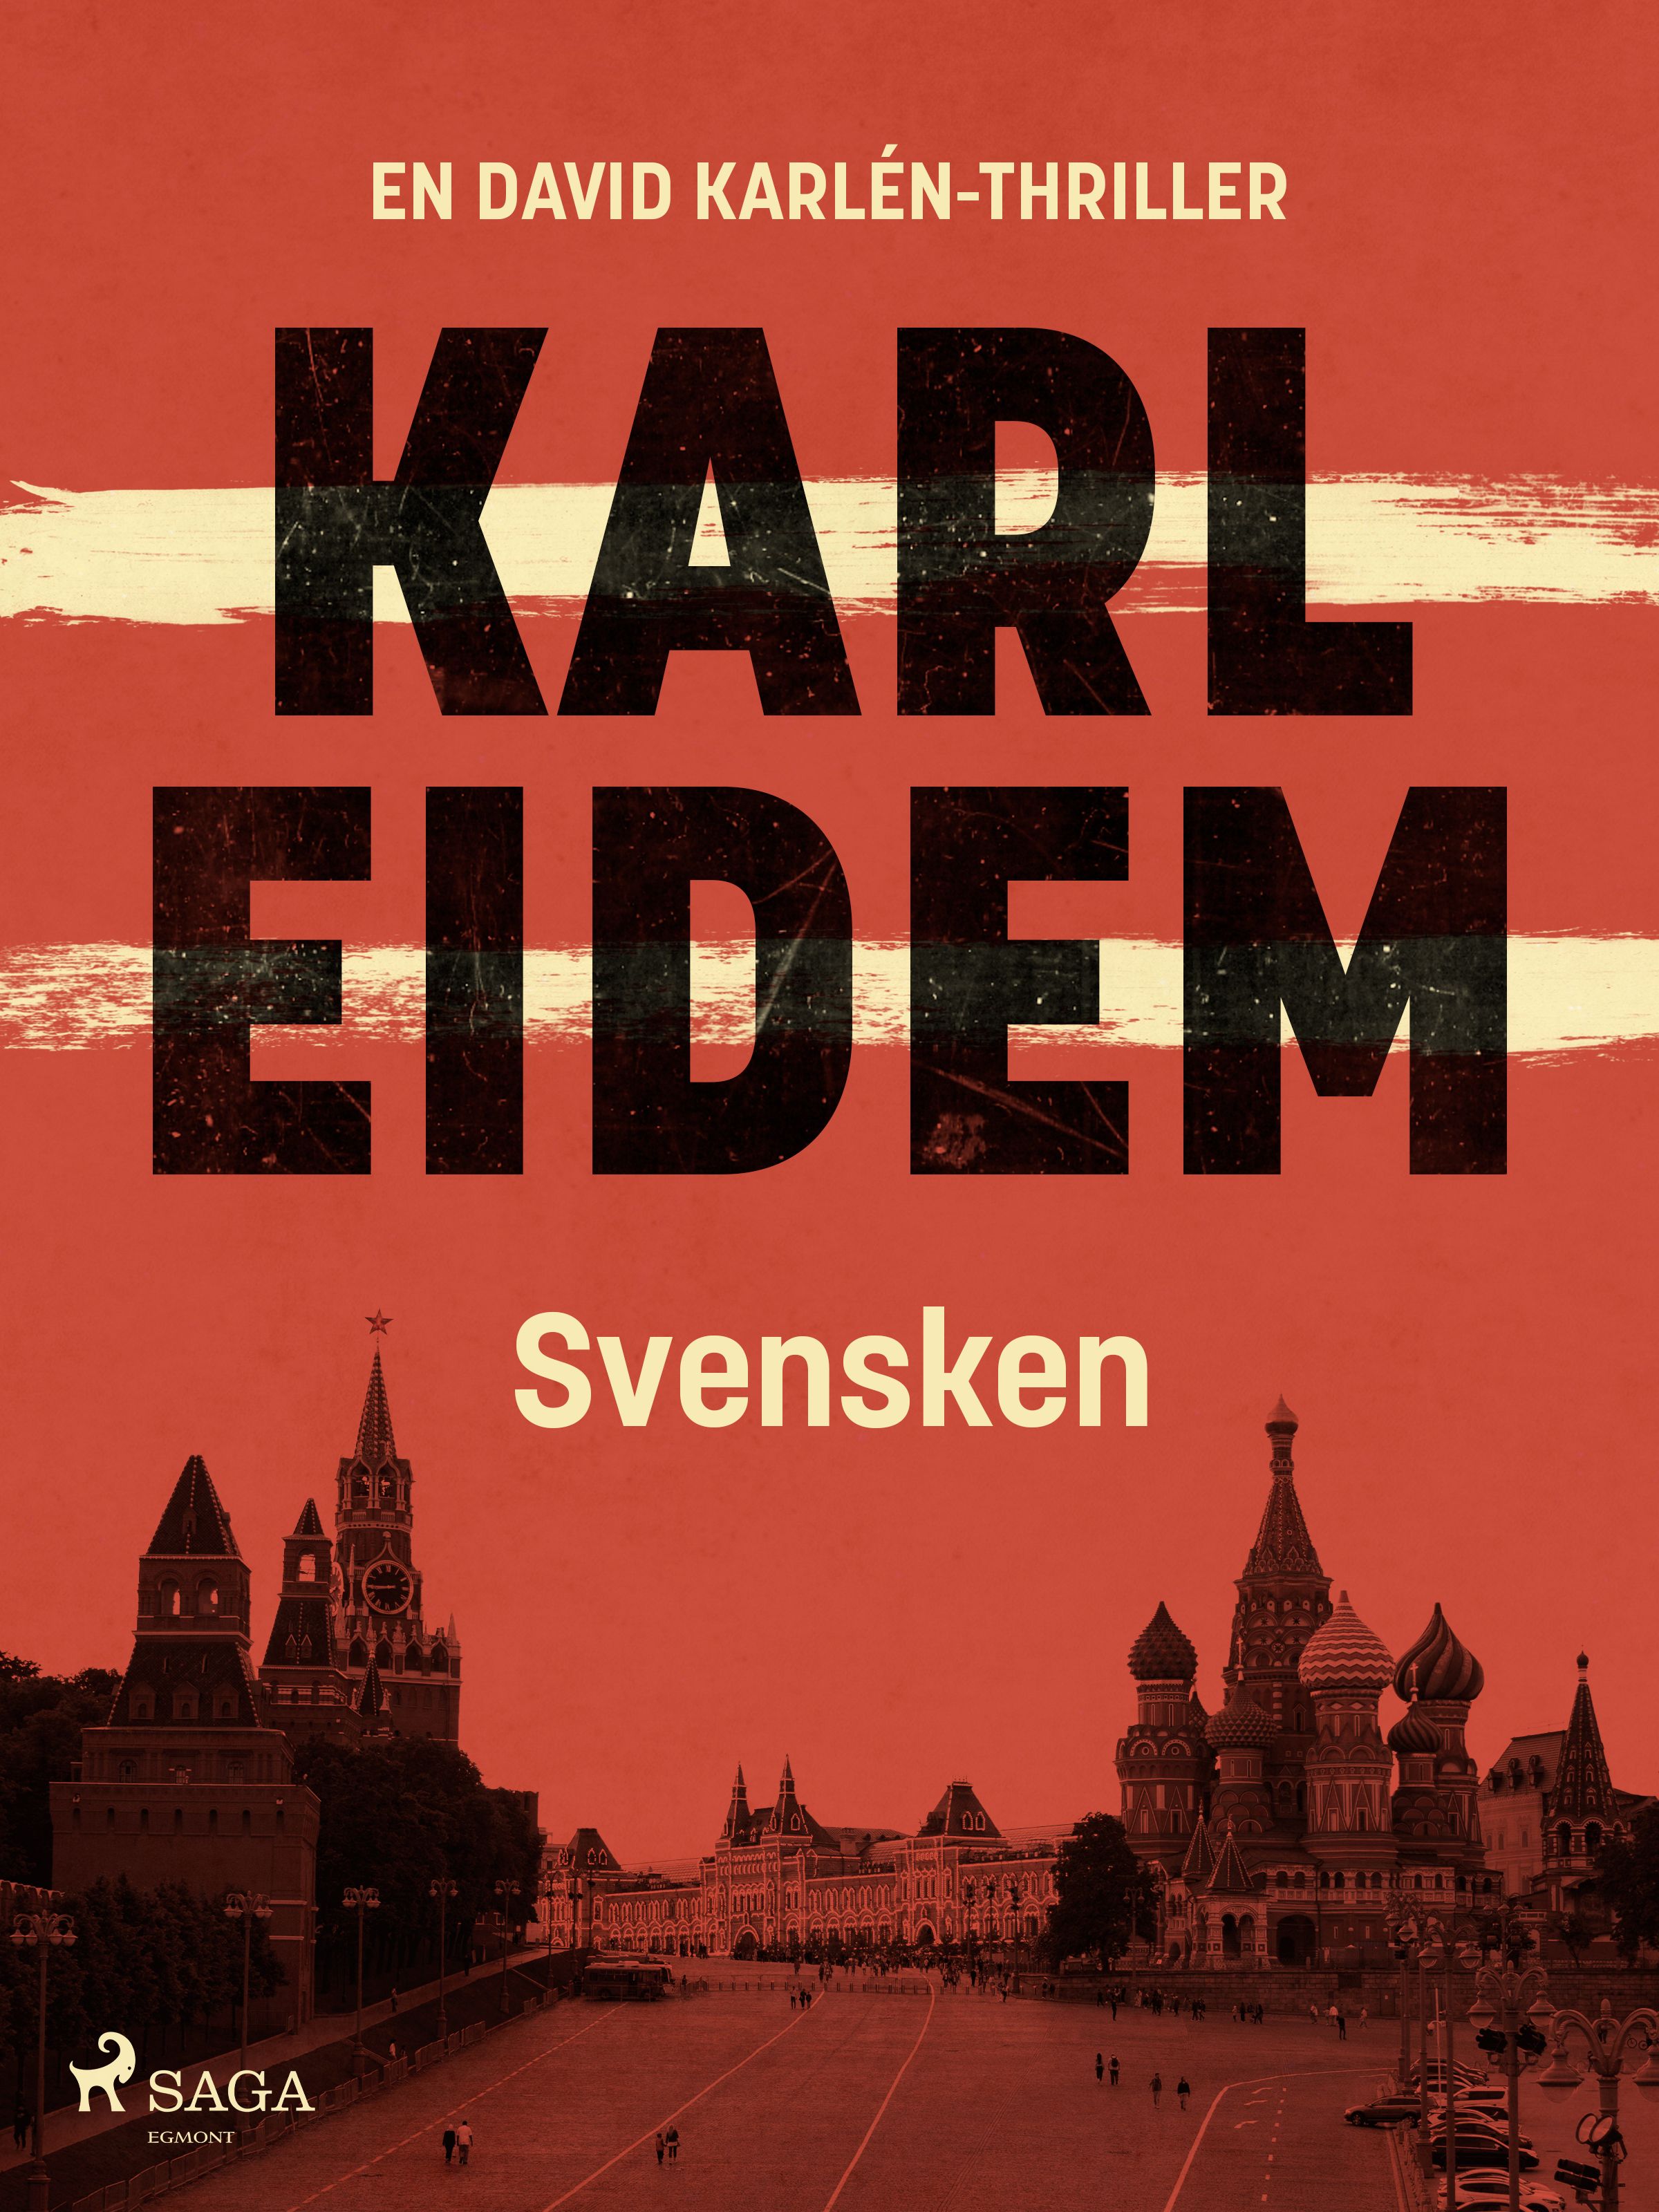 Svensken, eBook by Karl Eidem